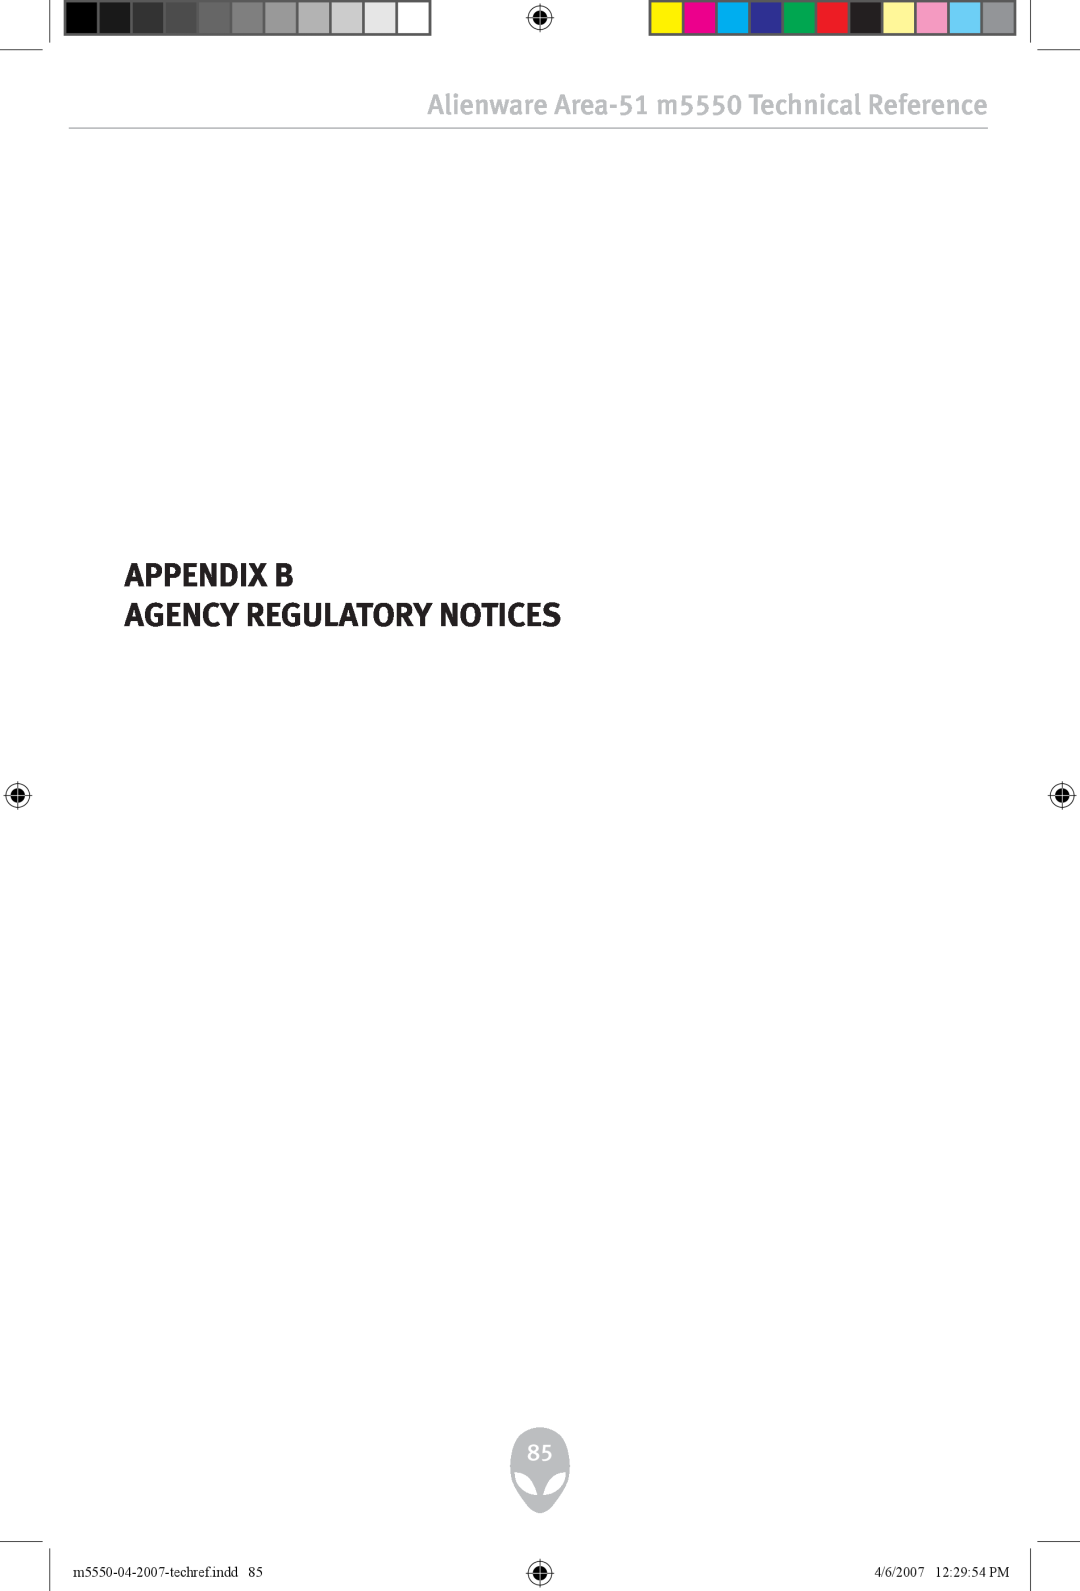 Alienware Appendix B Agency Regulatory Notices, Alienware Area-51 m5550 Technical Reference, m5550-04-2007-techref.indd 